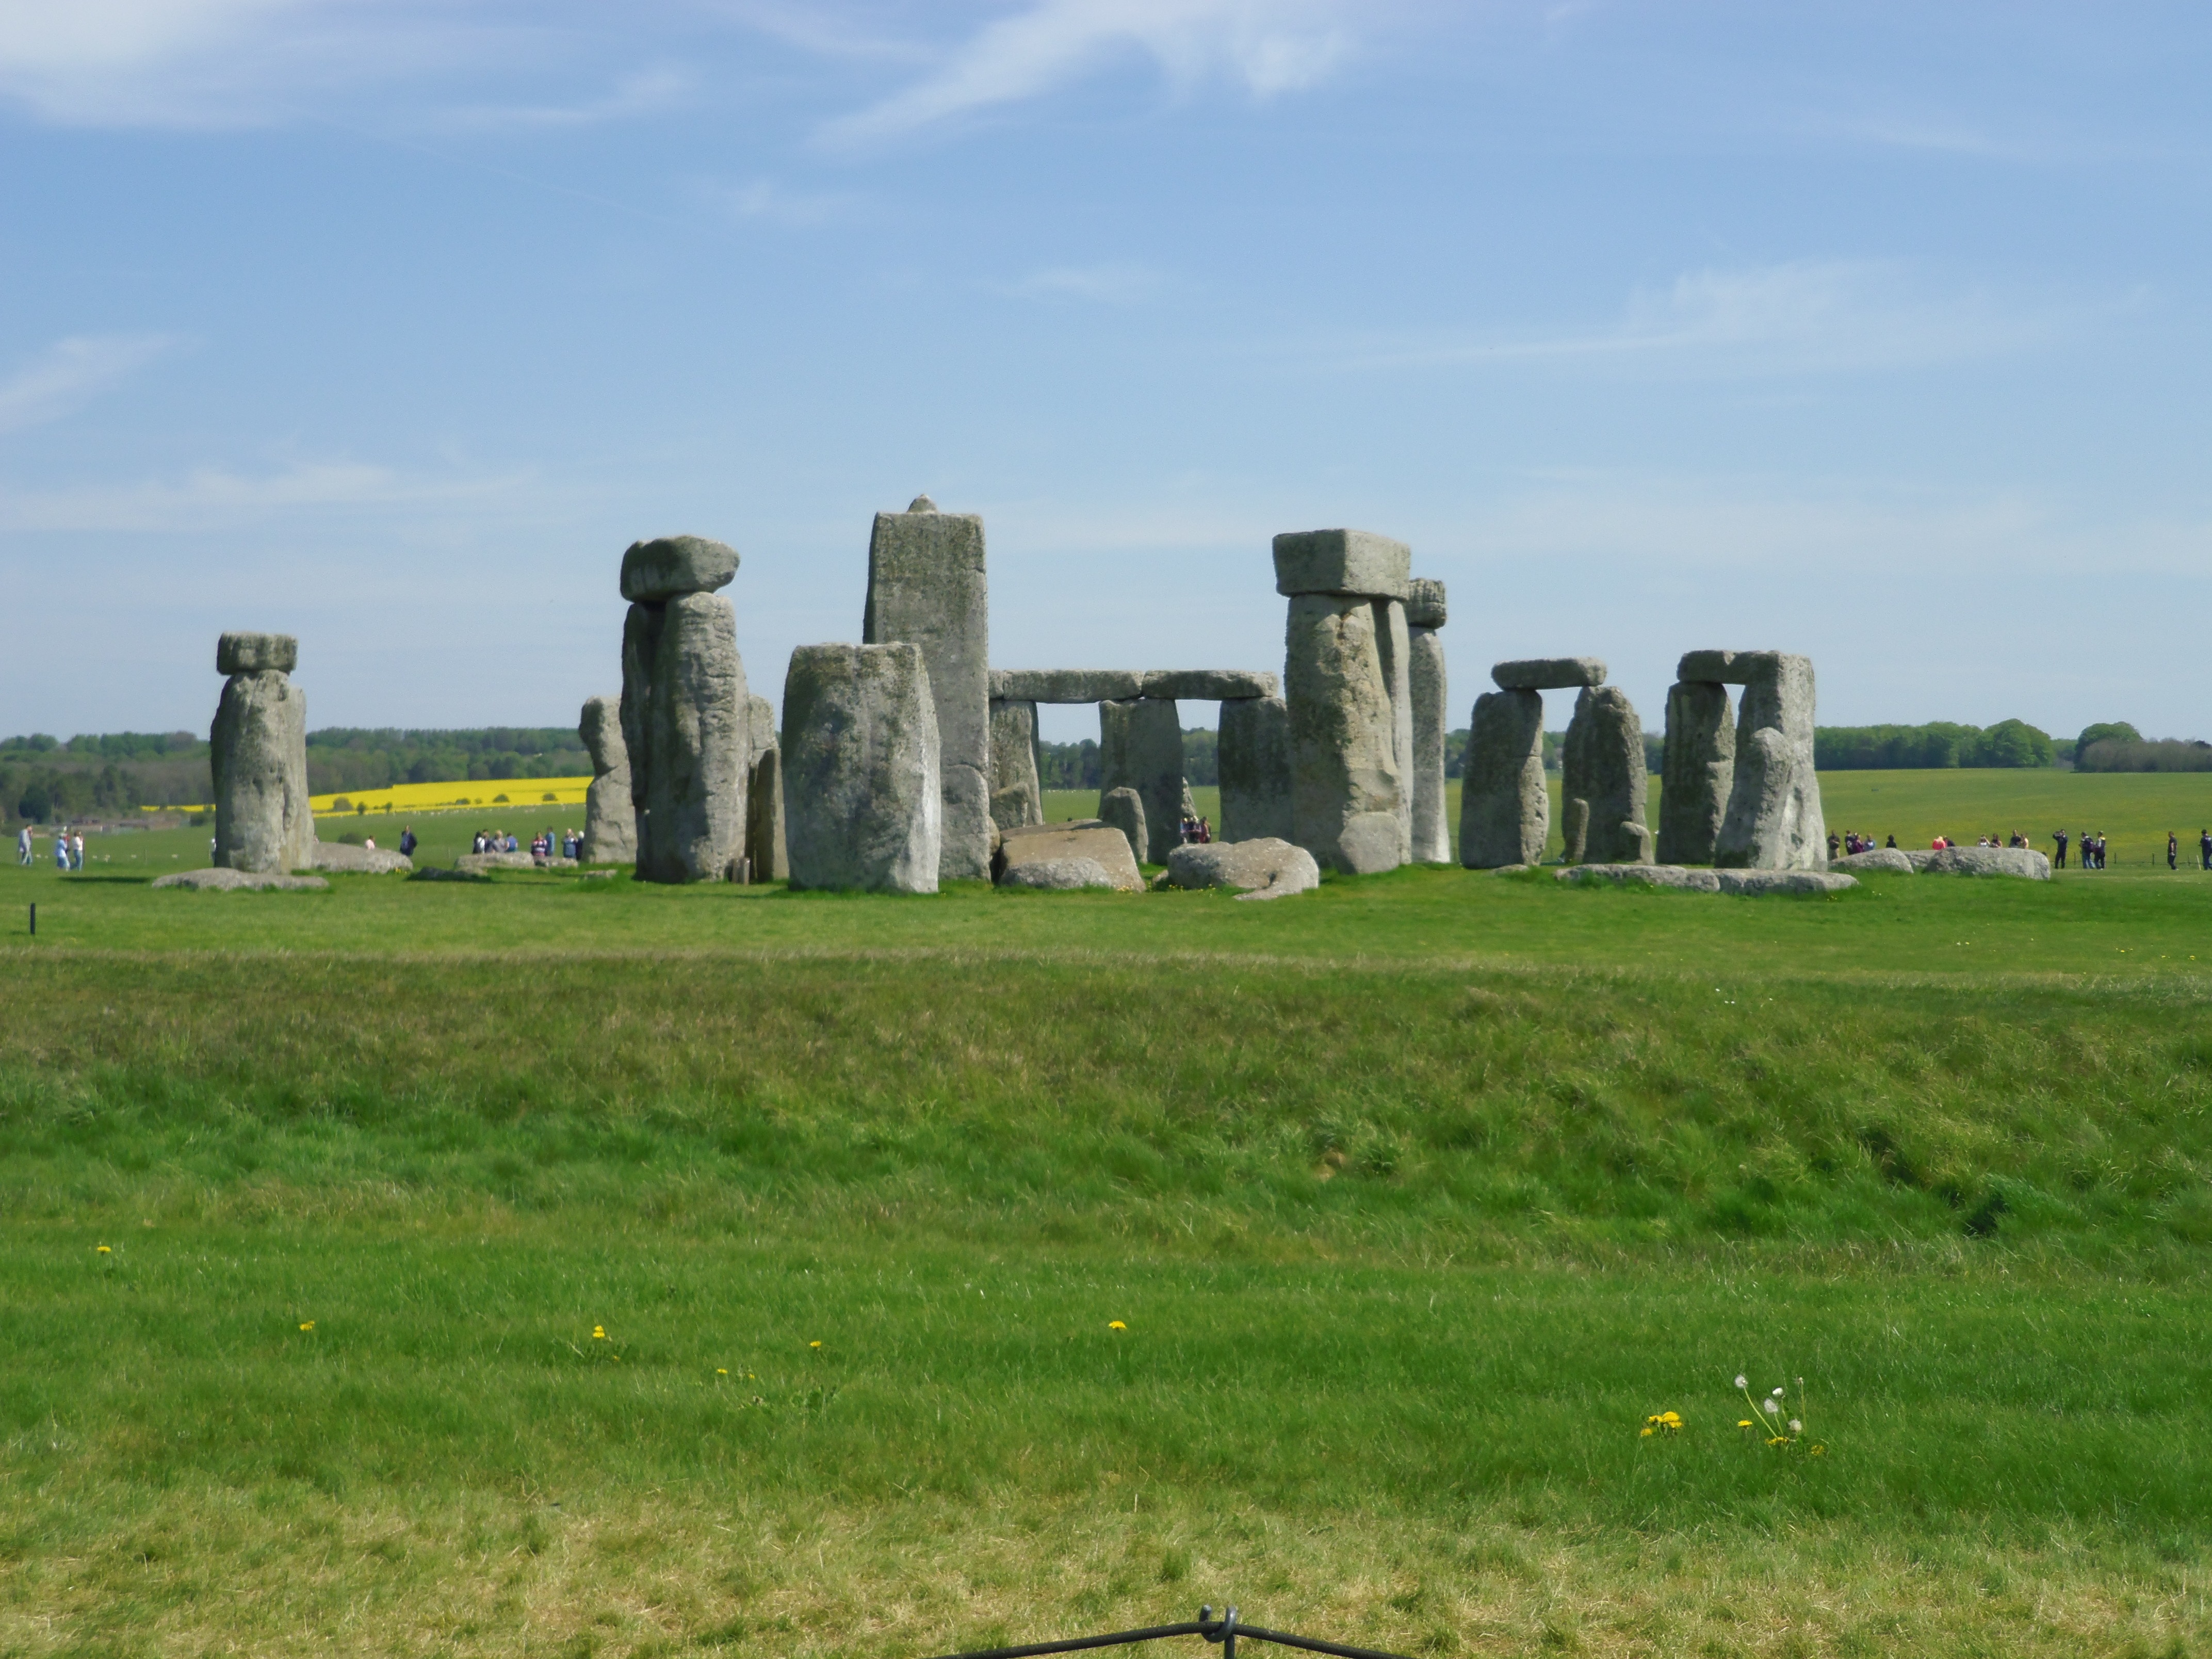 A daytrip to Stonehenge